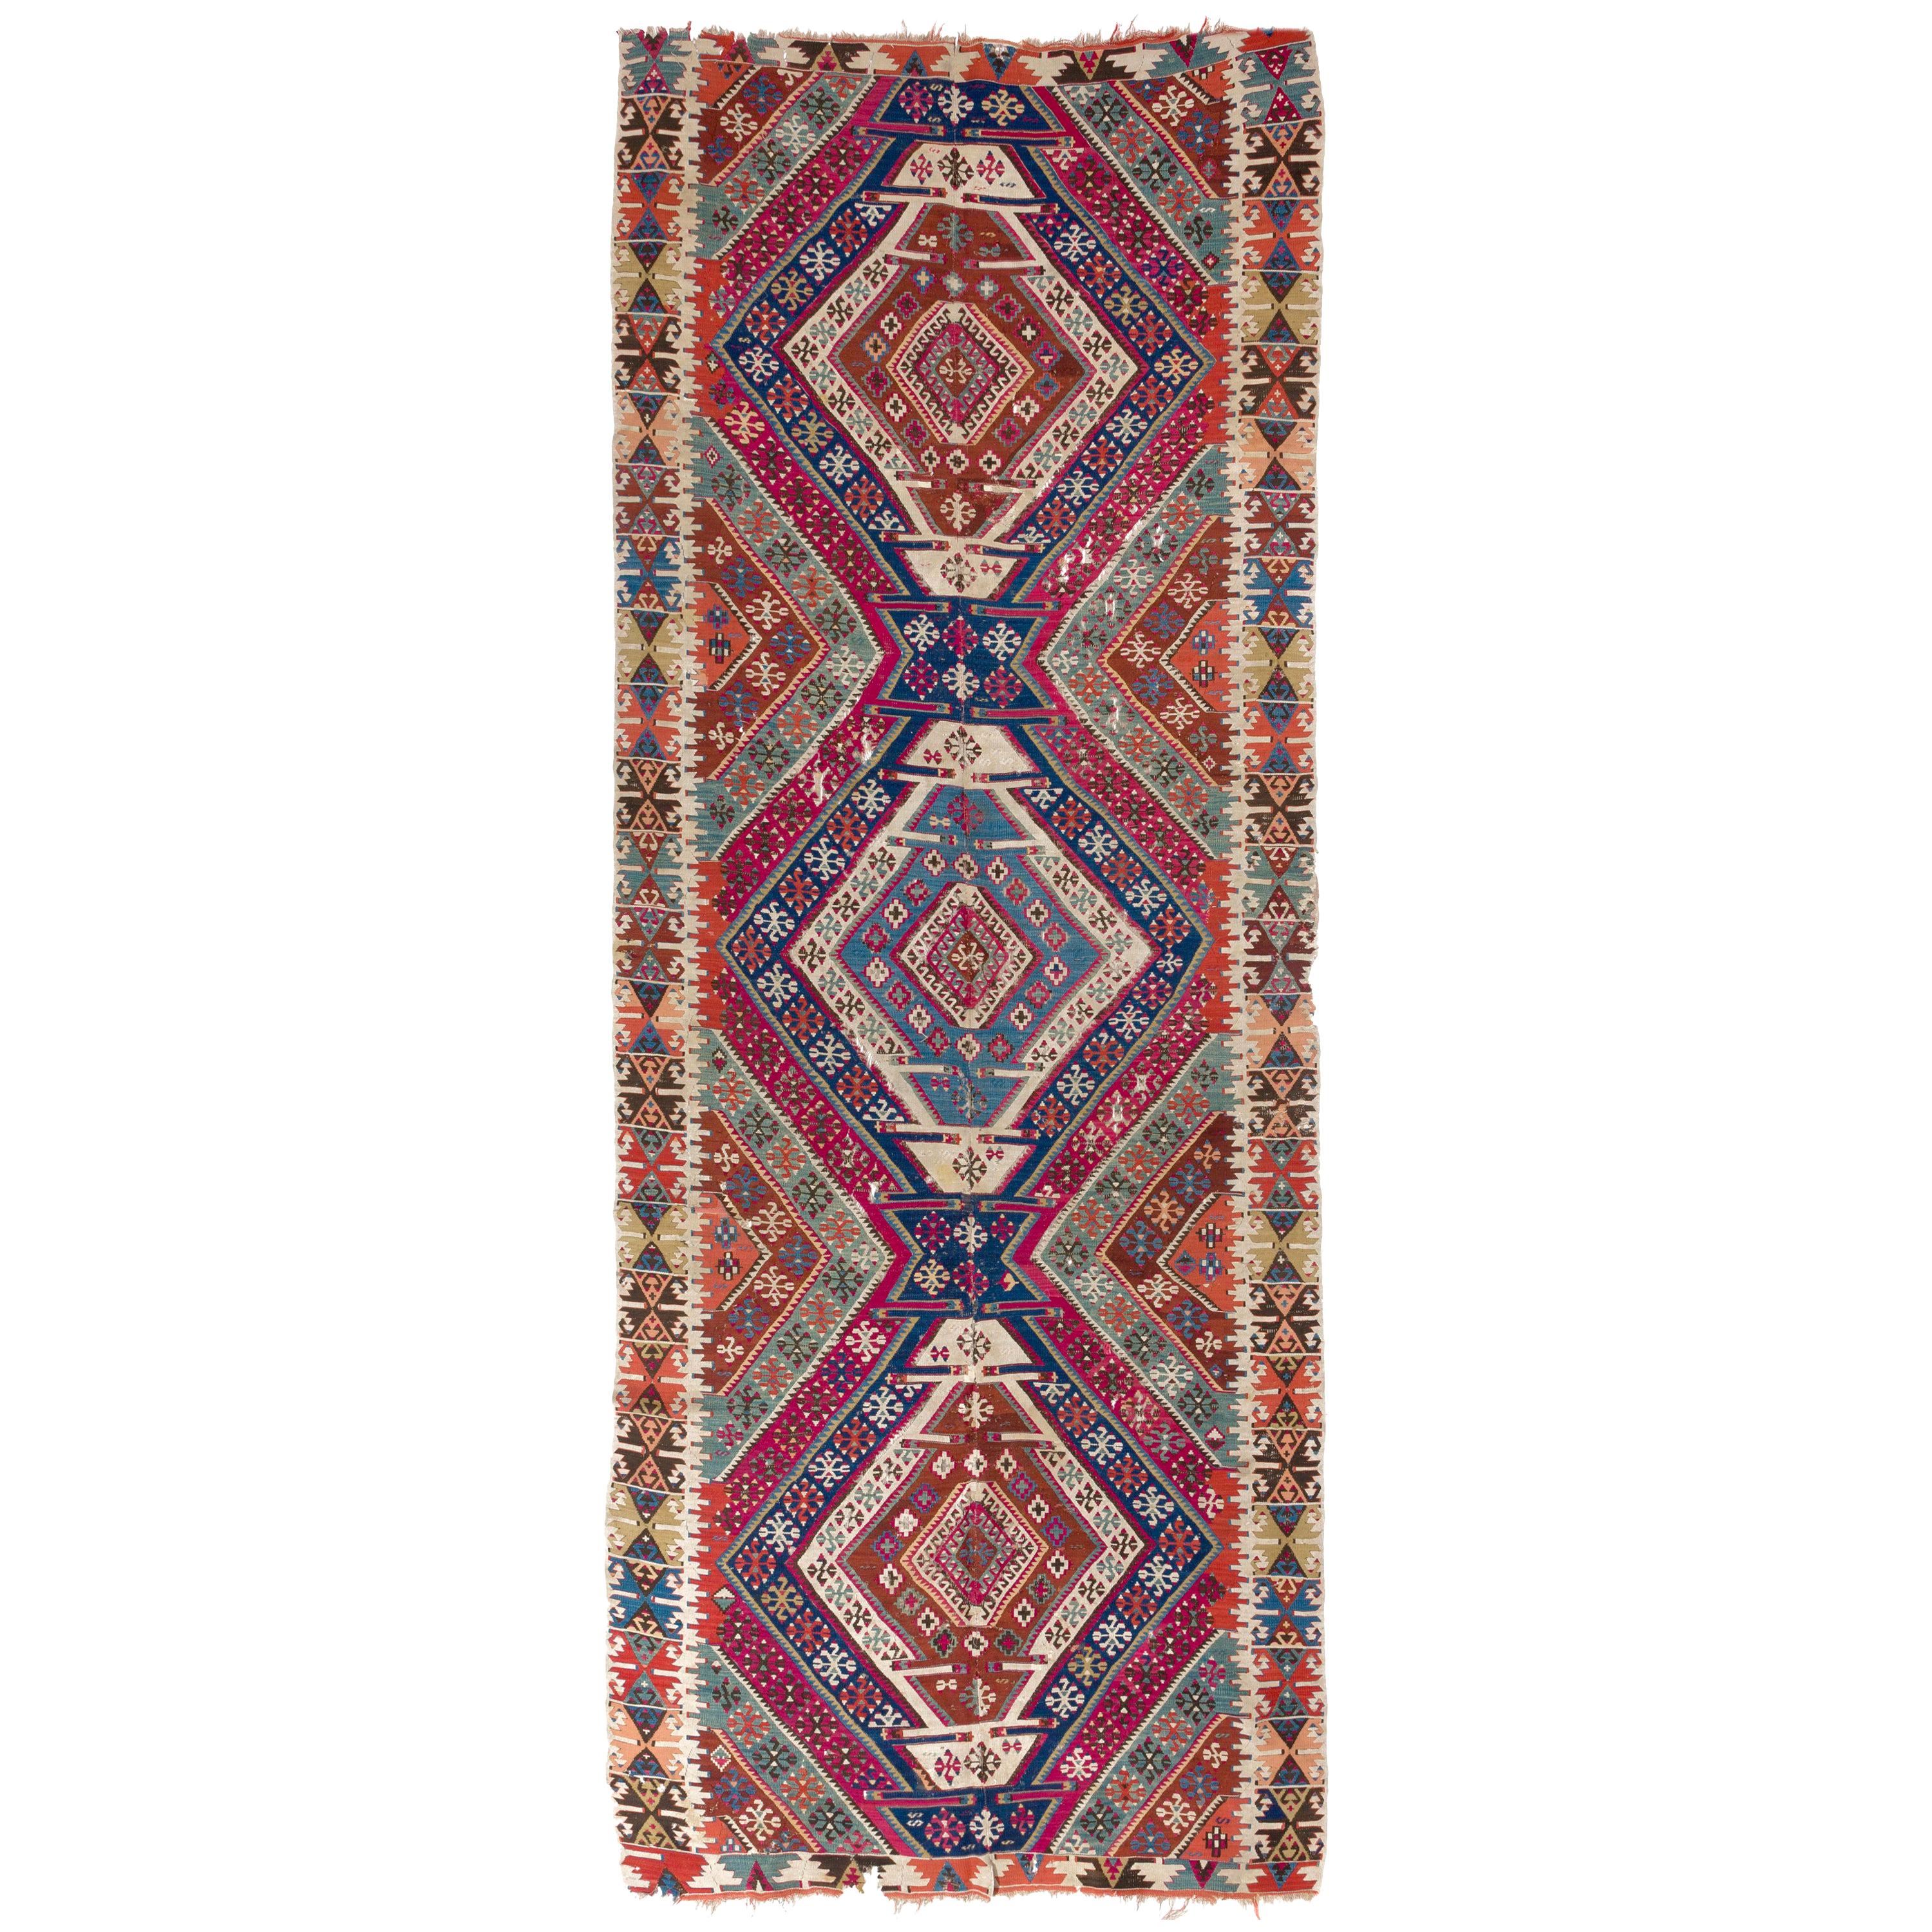 5x13.5 Ft Rare Antique Handmade Anatolian Flat-Weave Kilim Rug, Ca 1875 For Sale